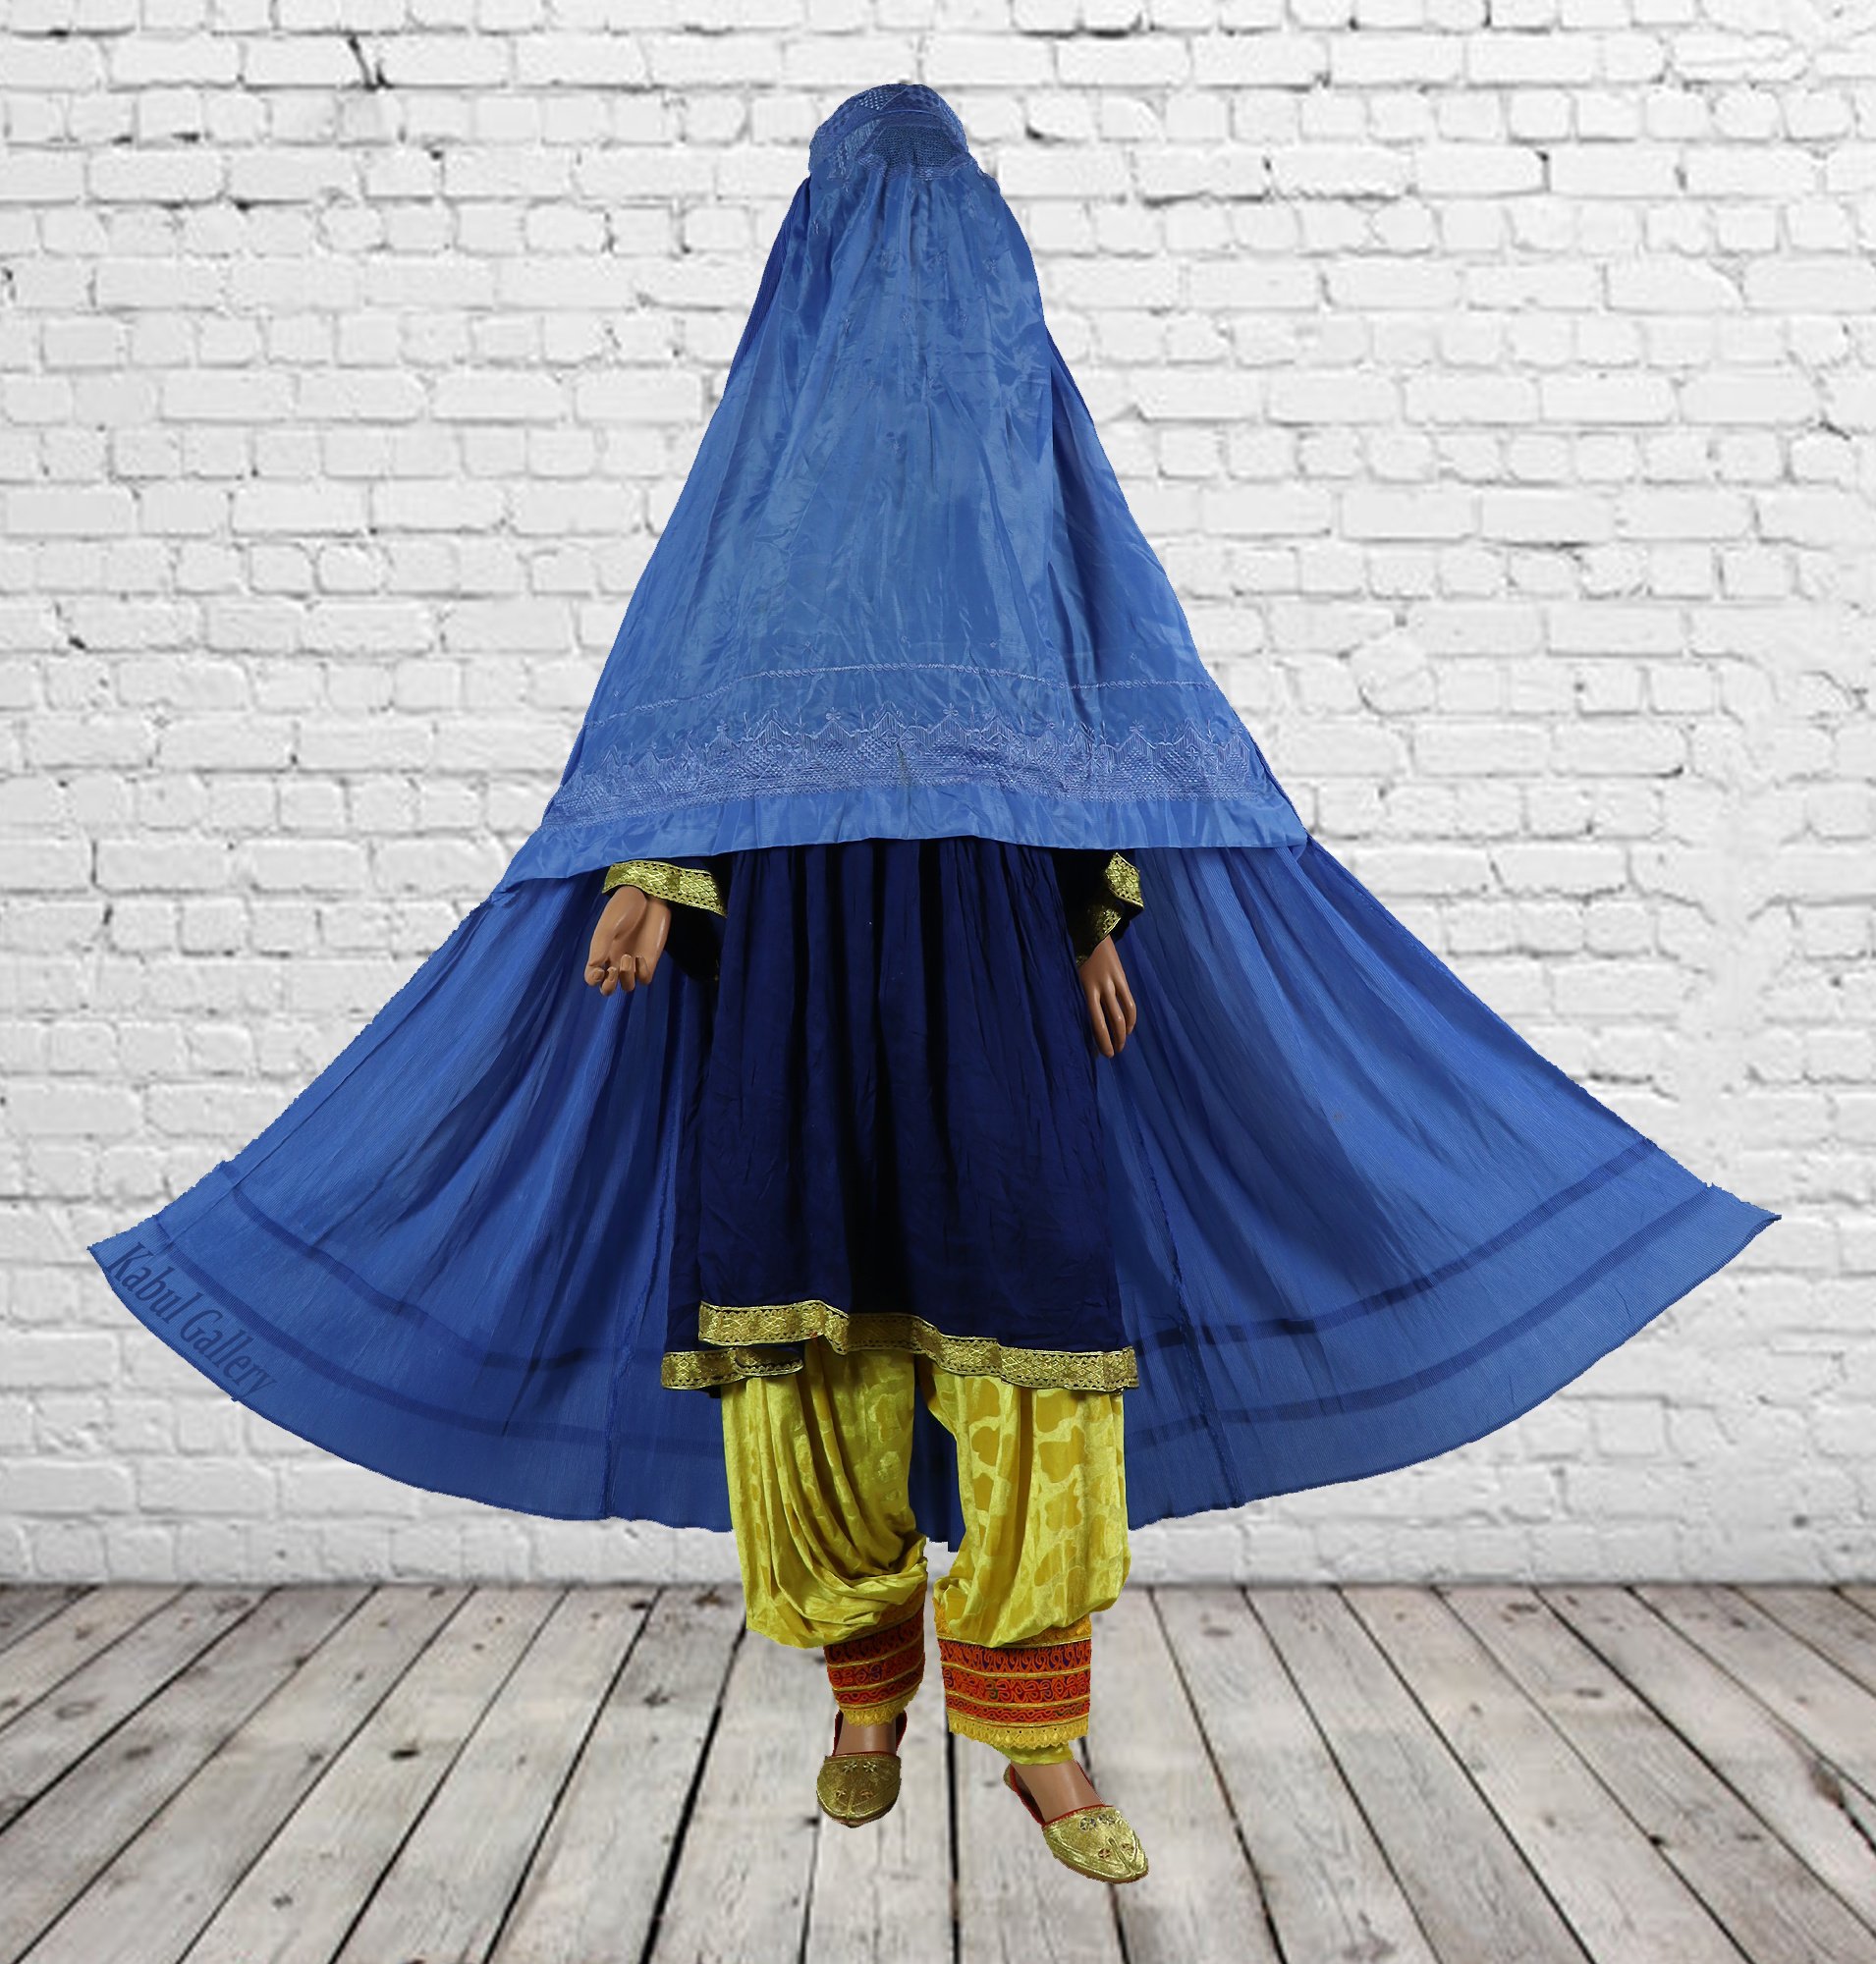 Original Afghanische Frauen schleier kopftuch Burka Burqua umhang afghan burqa abaya Niqab Kleid hijab Tschador afghanistan Pakistan (blau)